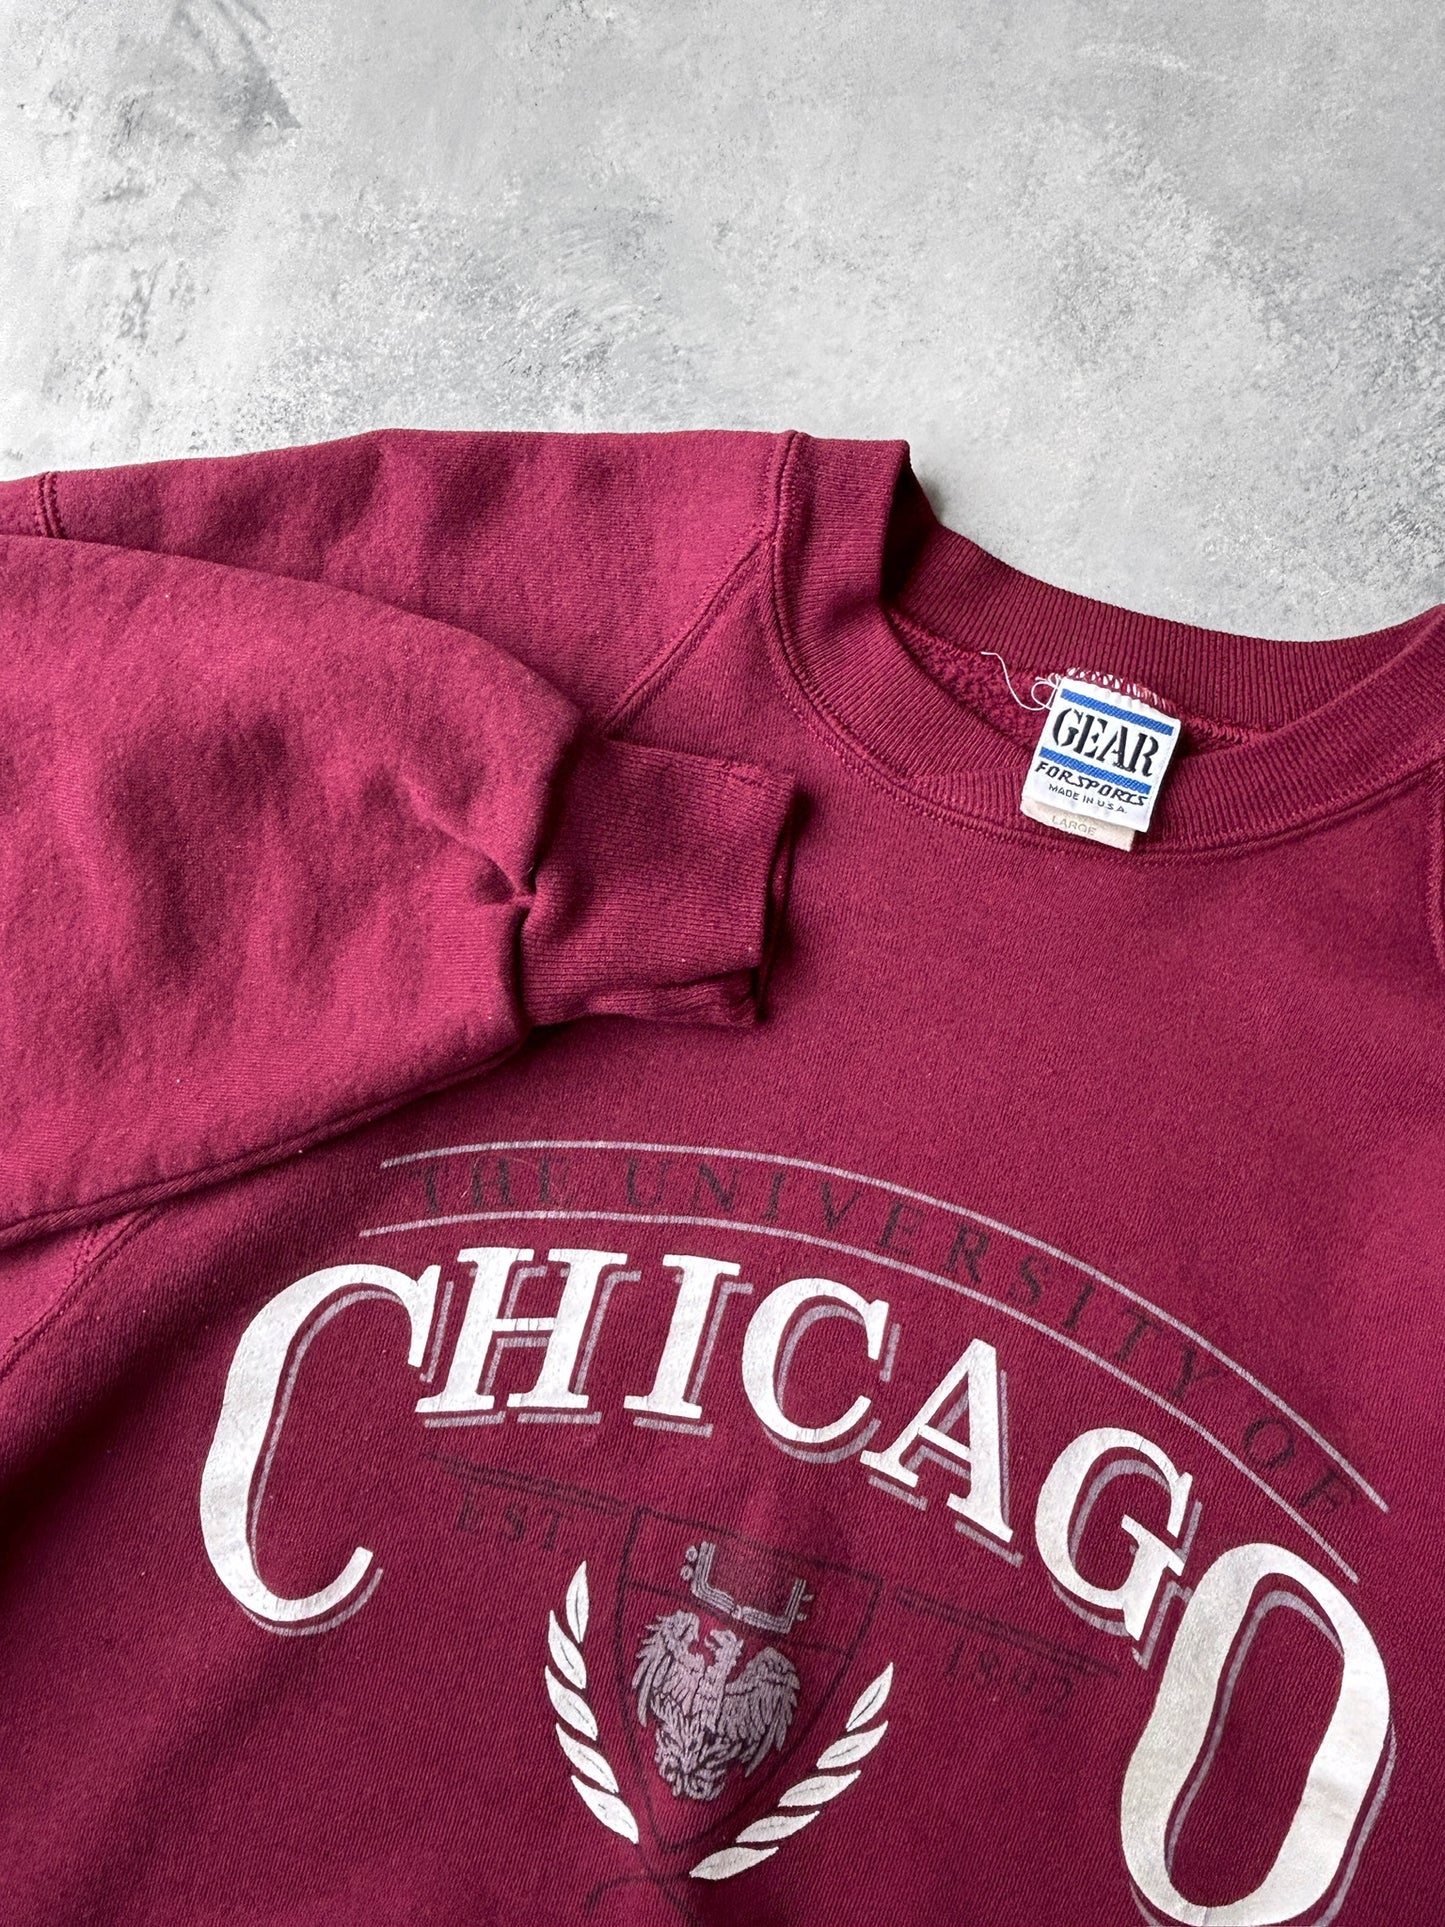 University of Chicago Sweatshirt 90's - Large